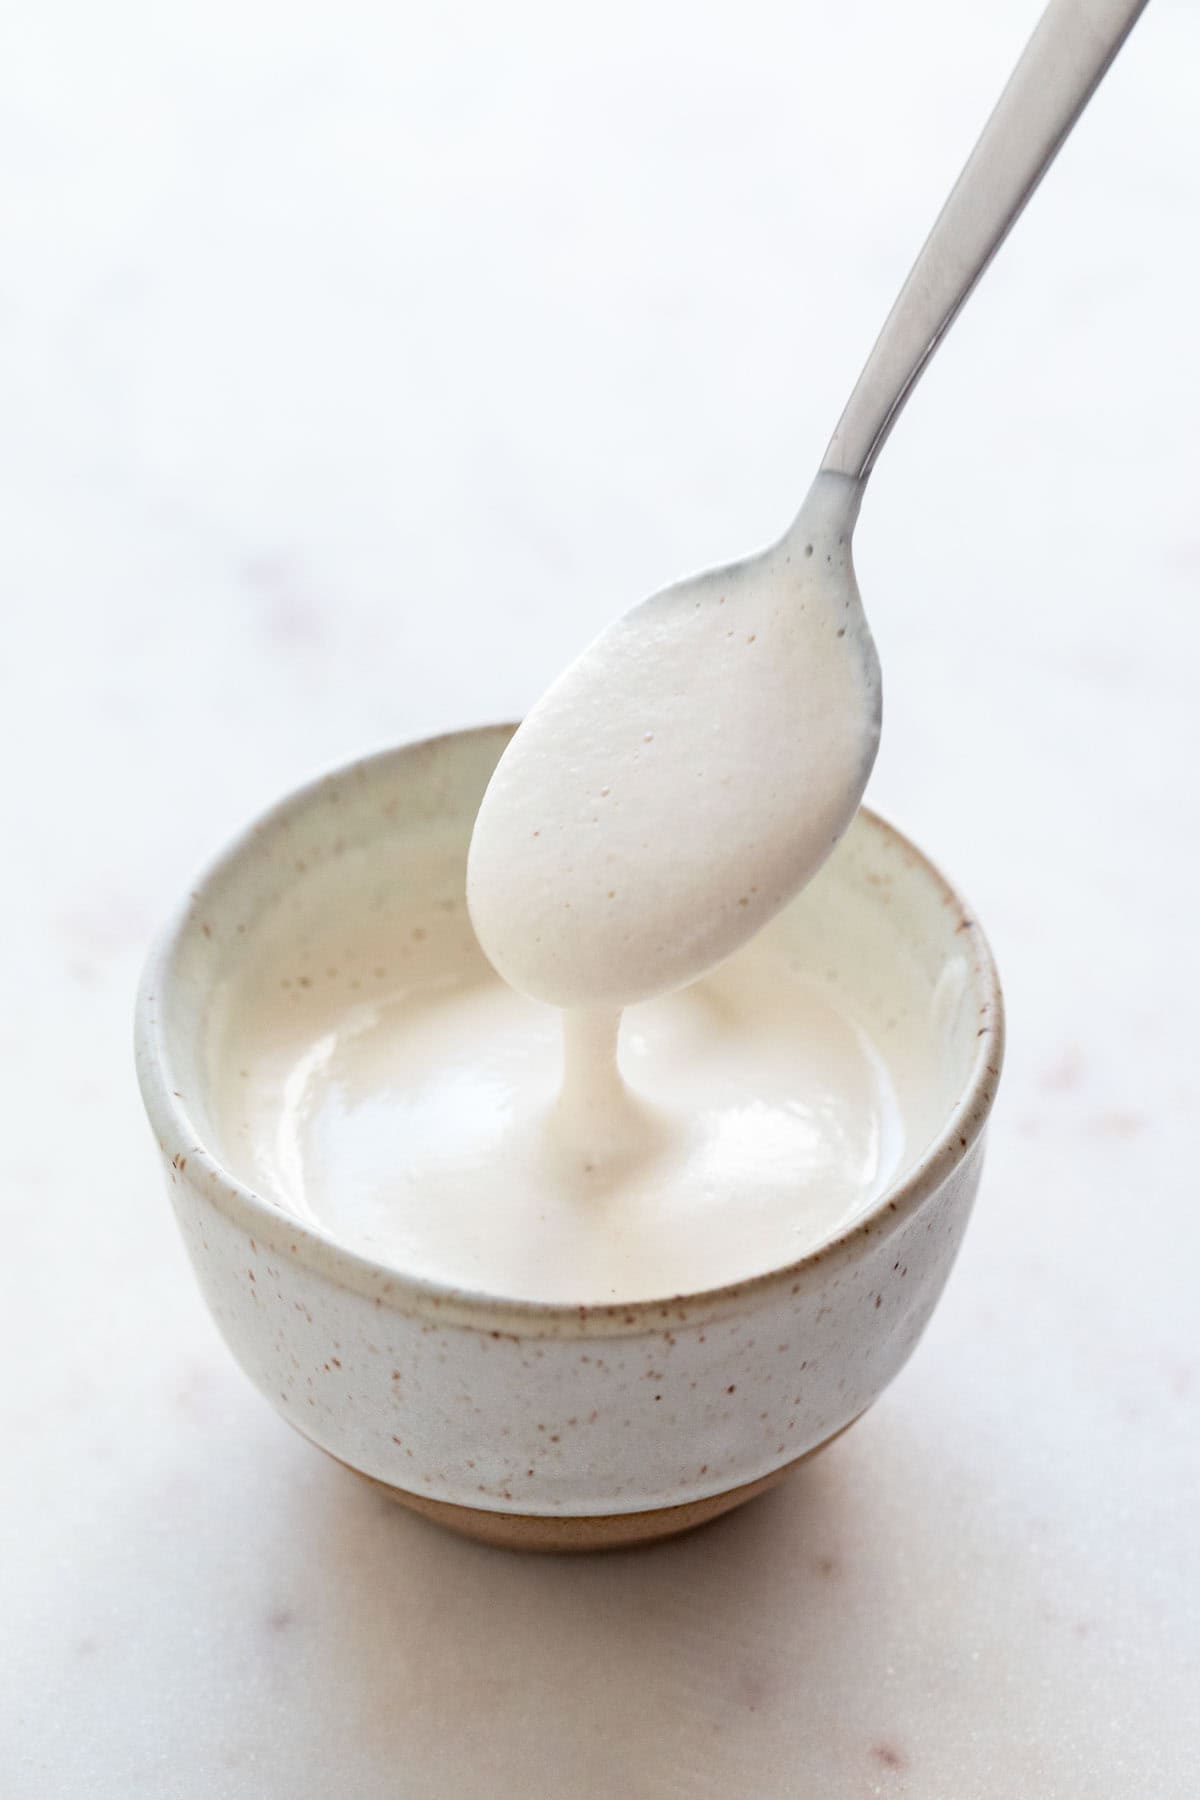 Spoon scooping vegan heavy cream substitute from bowl.